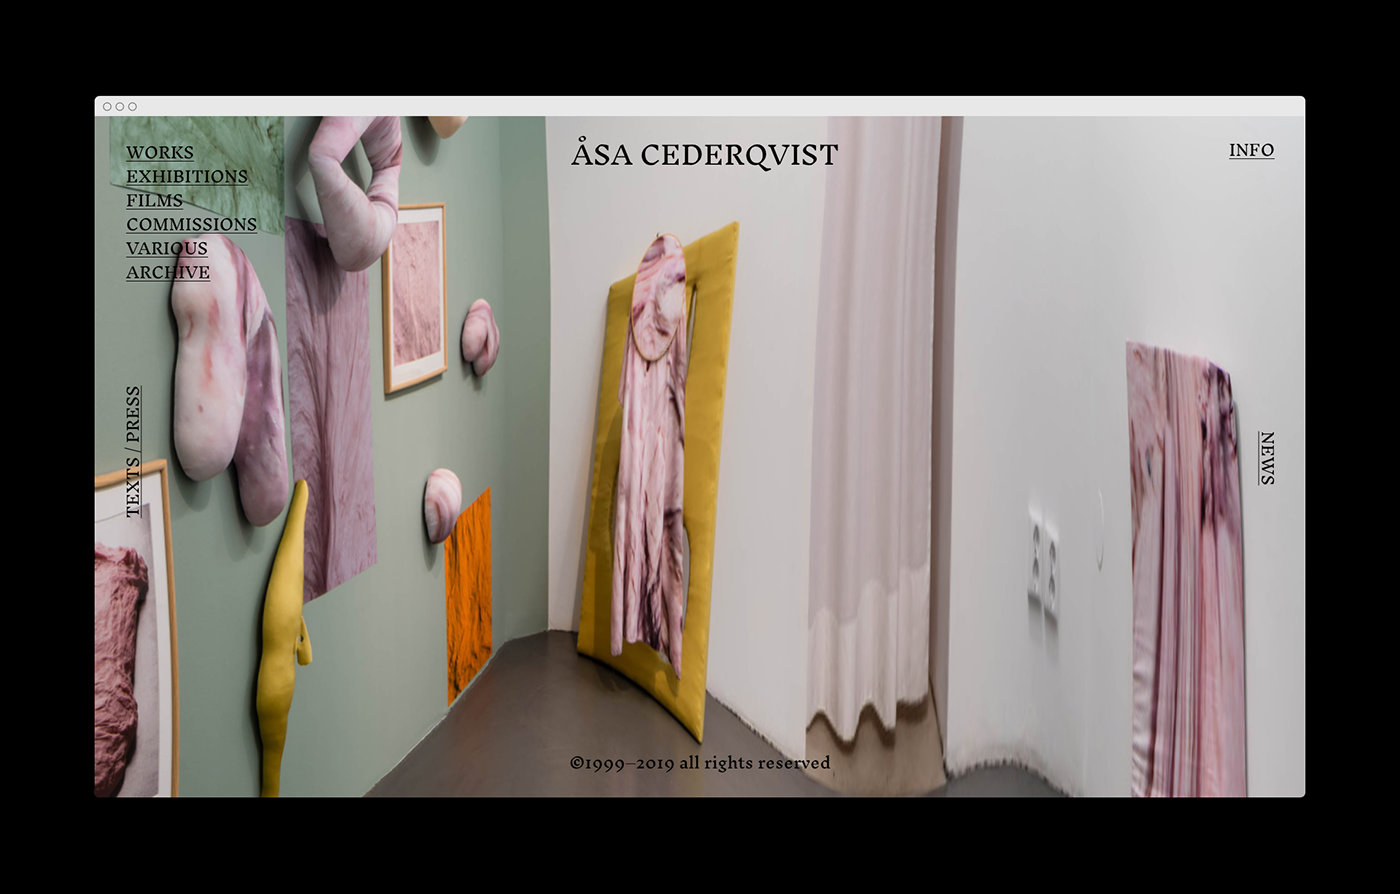 website design idea #616: Åsa Cederqvist – Website